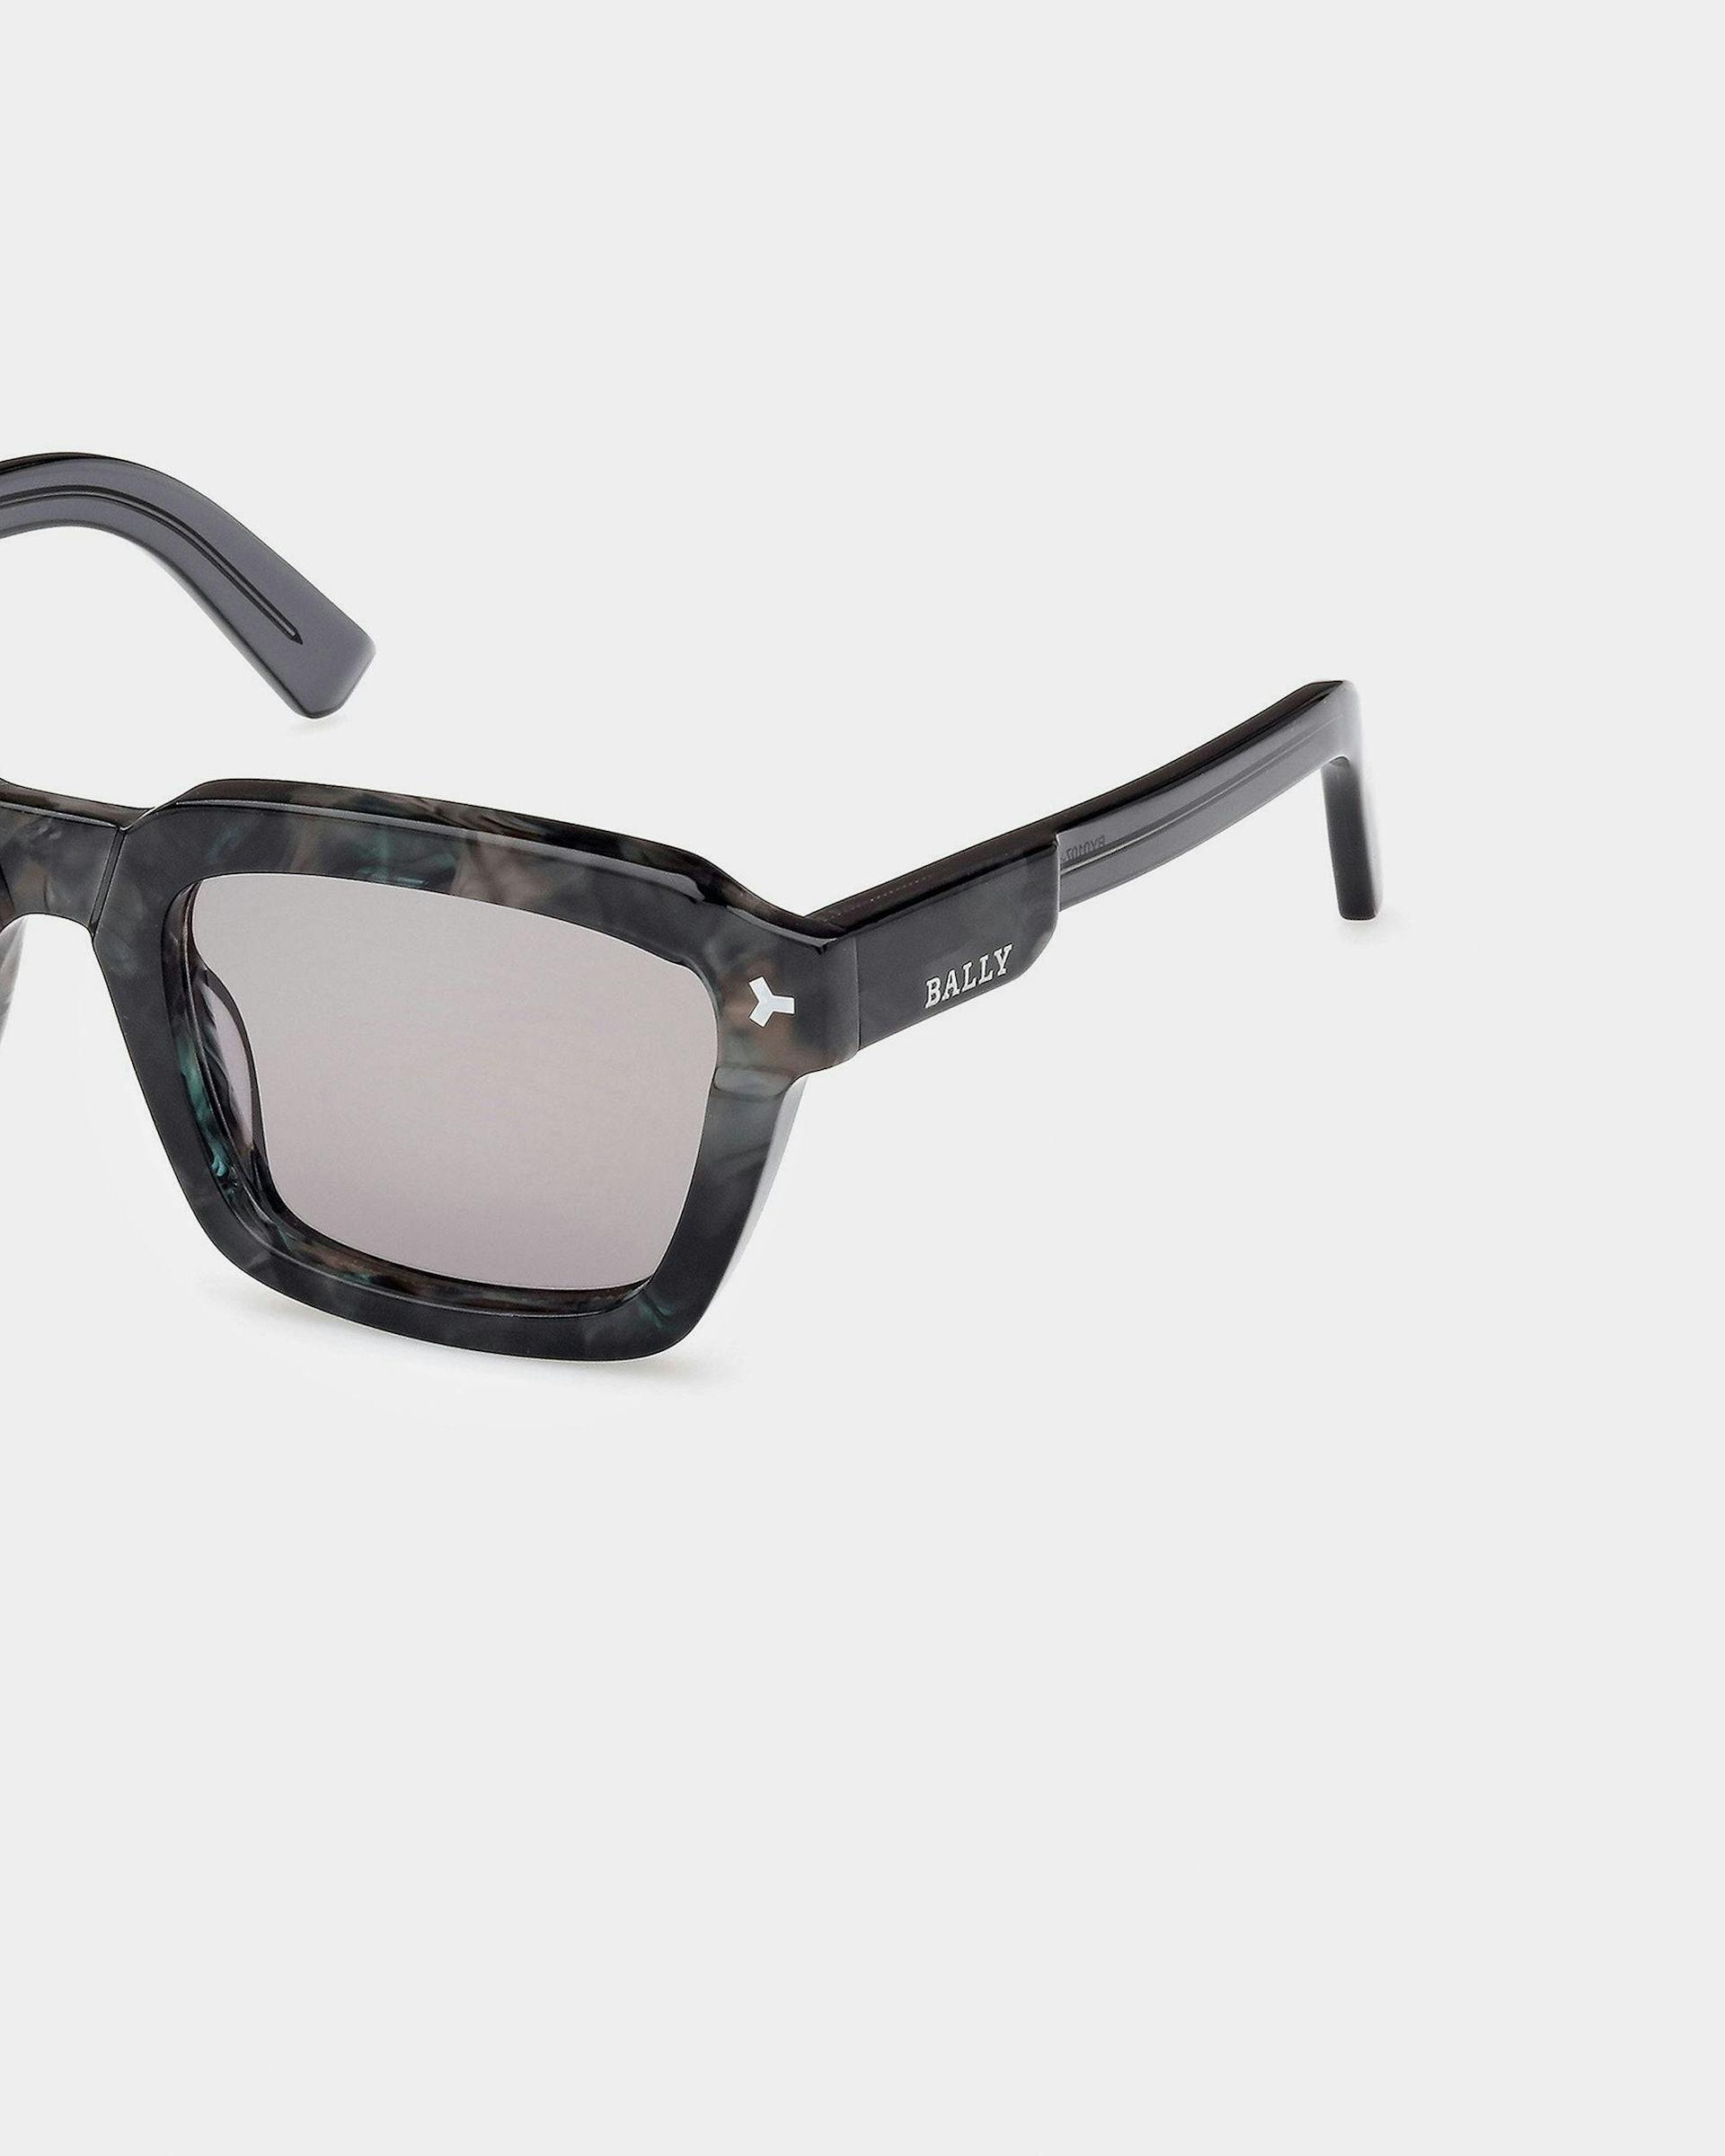 Nicholas Rectangular Full Rim Sunglasses In Black And Gray Plastic - Men's - Bally - 03